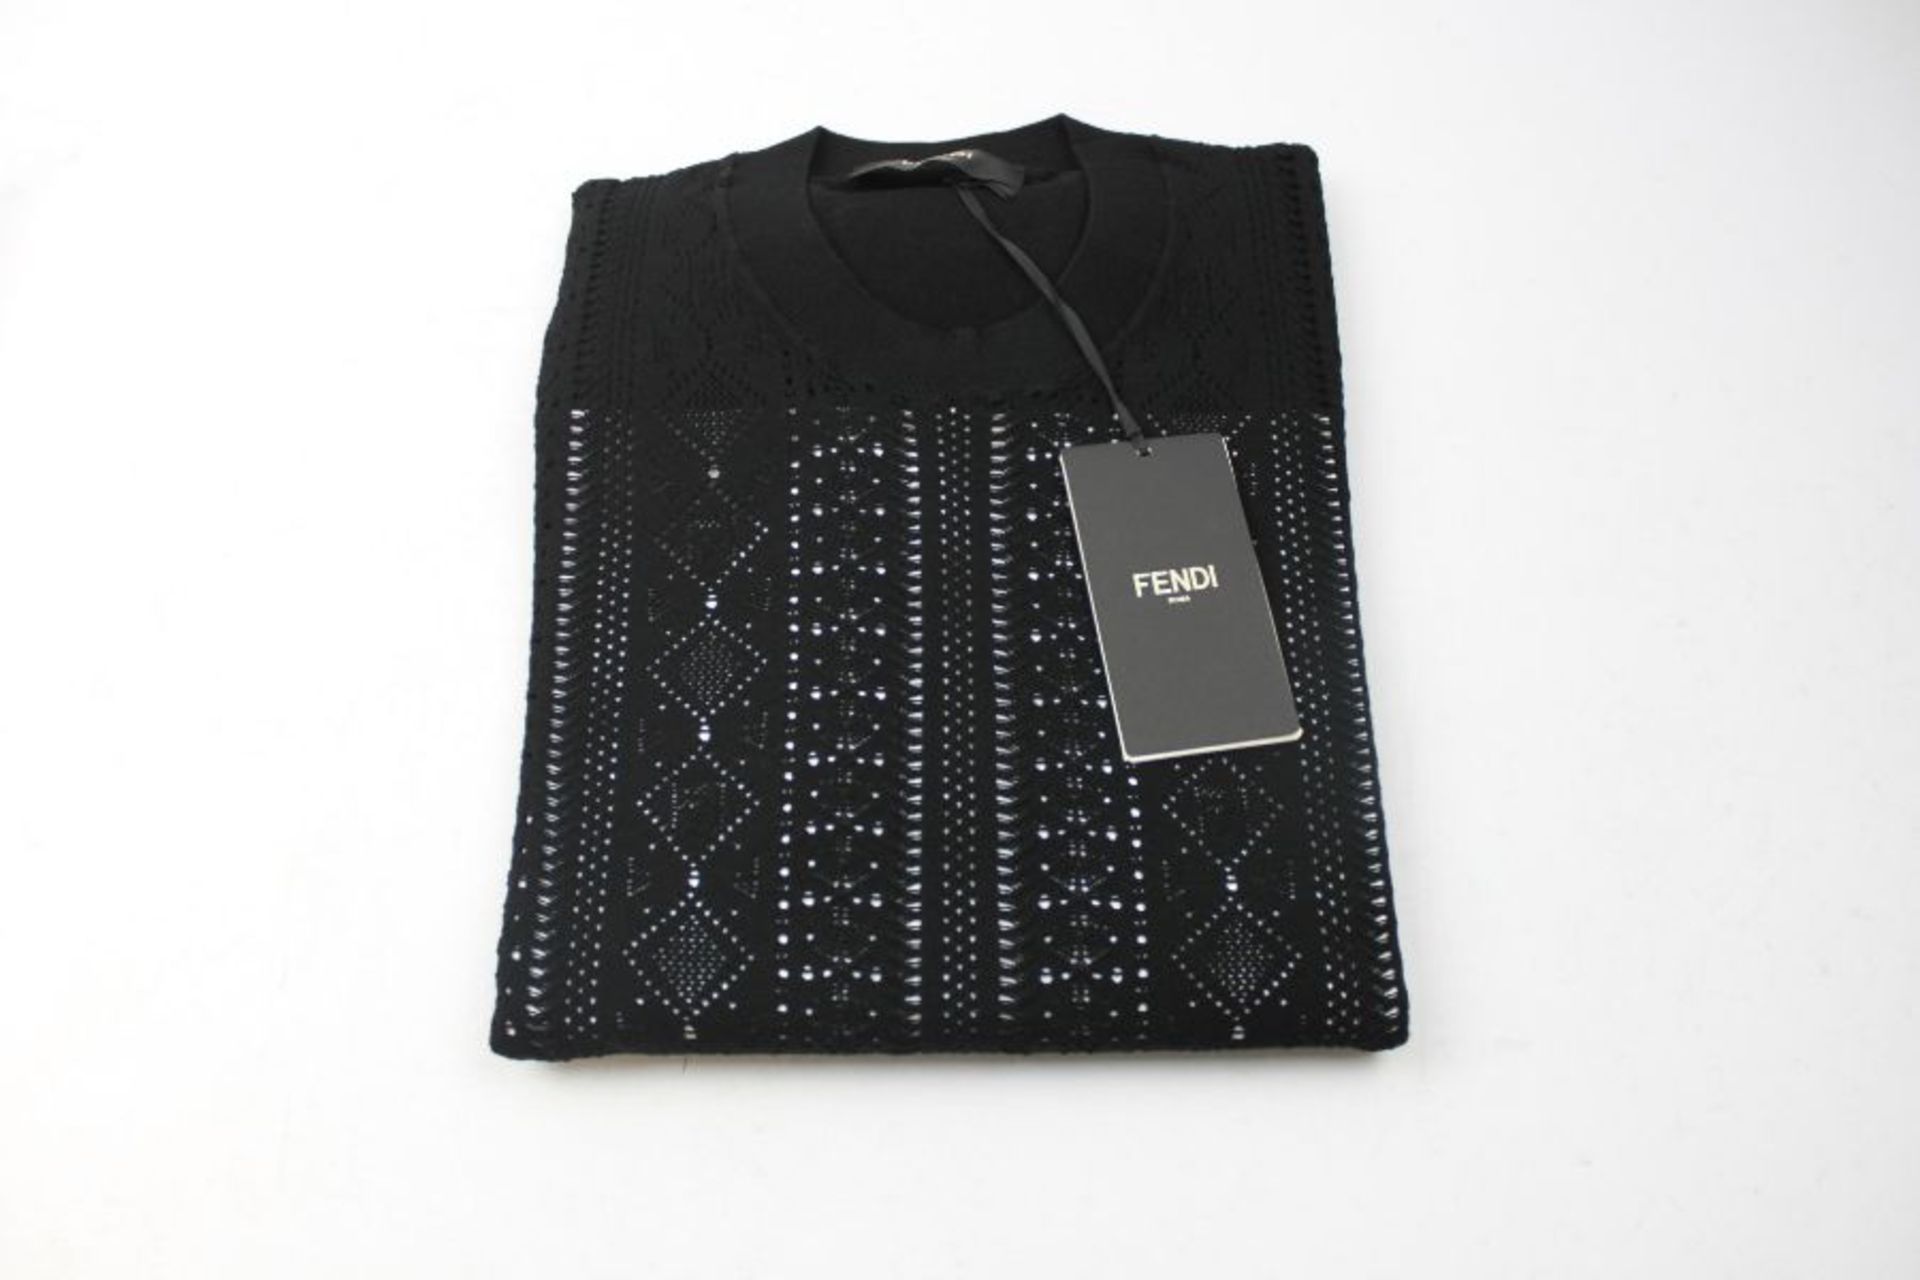 Fendi Men's Ff-flocked Cotton-blend Jersey Sweatshirt, Black, Size XXXL - Image 3 of 3